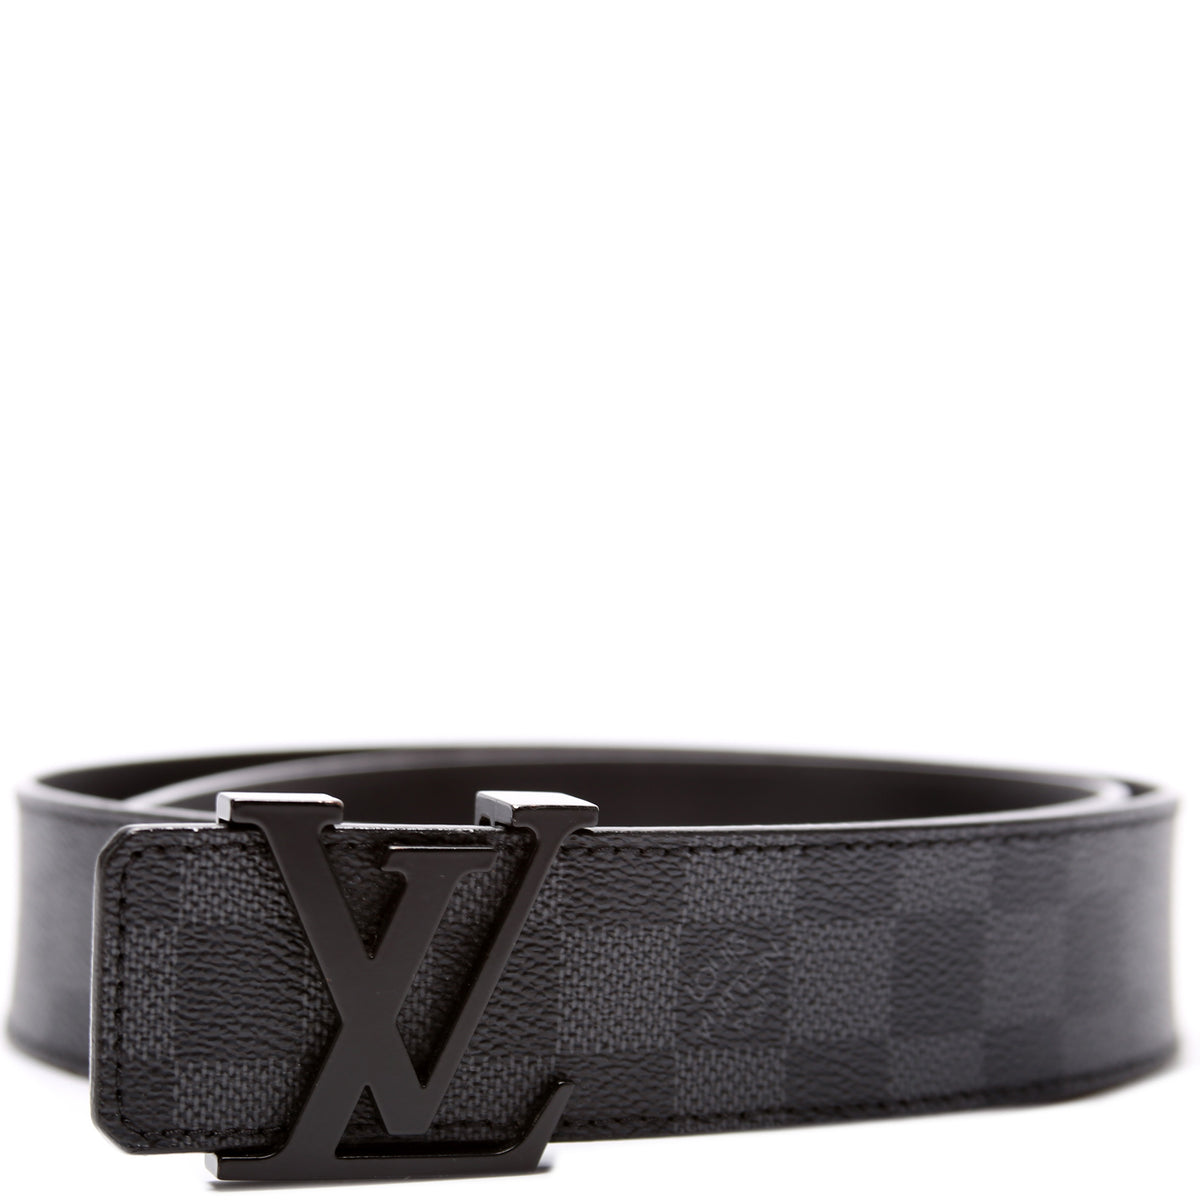 Louis Vuitton Damier Graphite Silver Buckle Wide Belt Black Grey 100